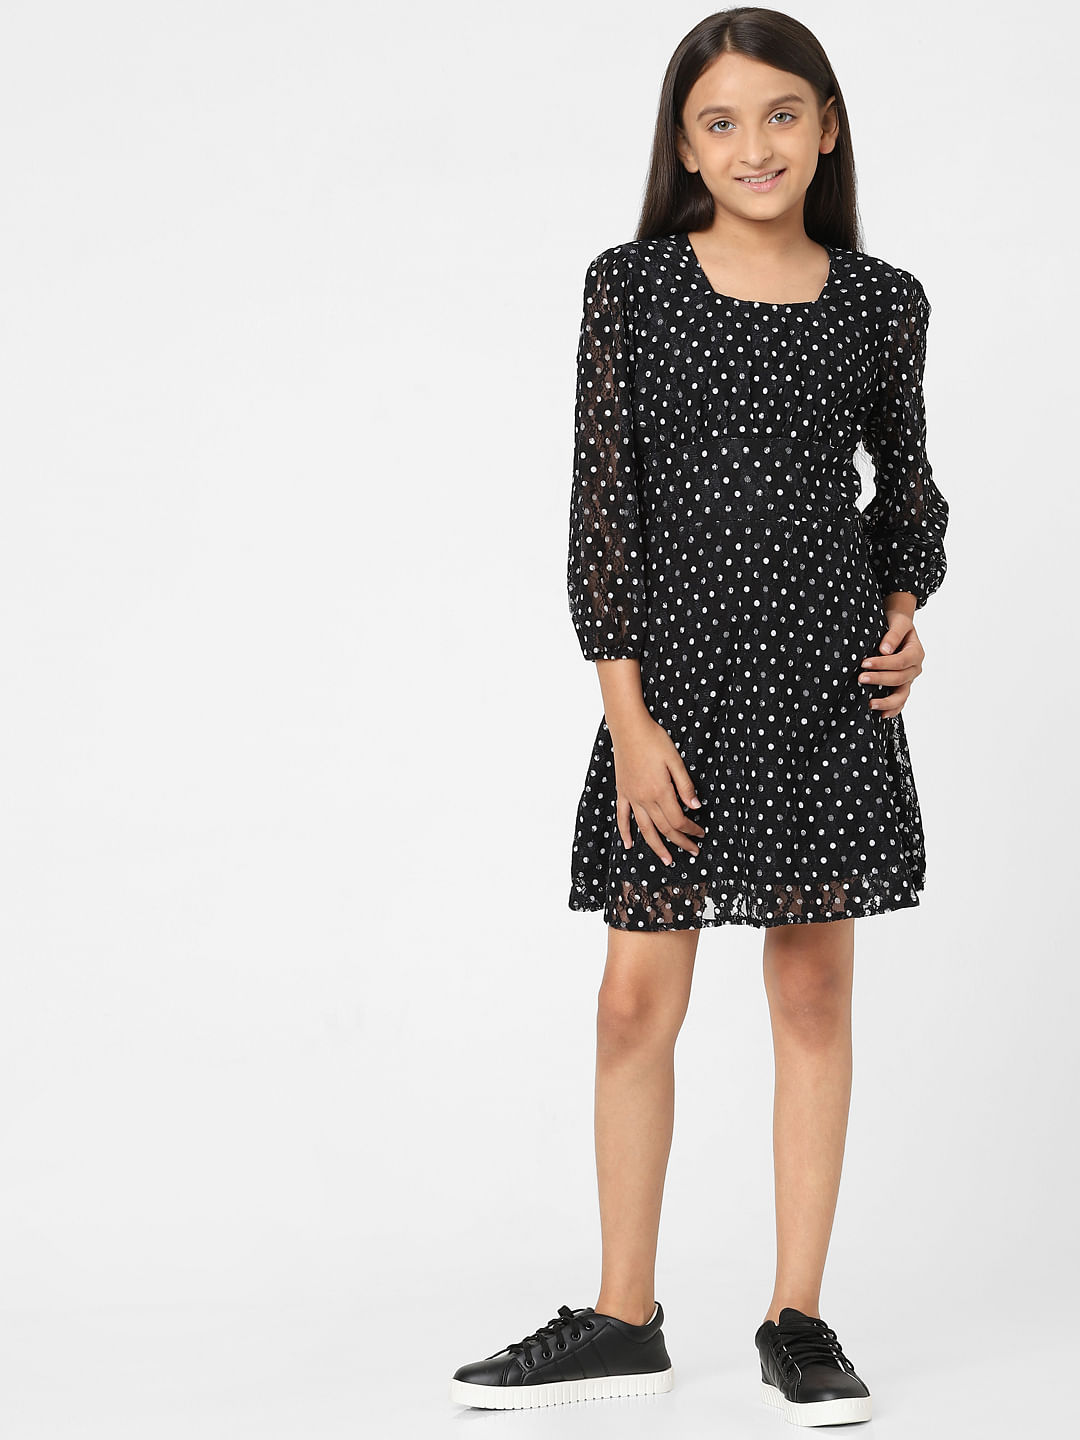 Buy Black Dresses & Frocks for Girls by Tior Online | Ajio.com